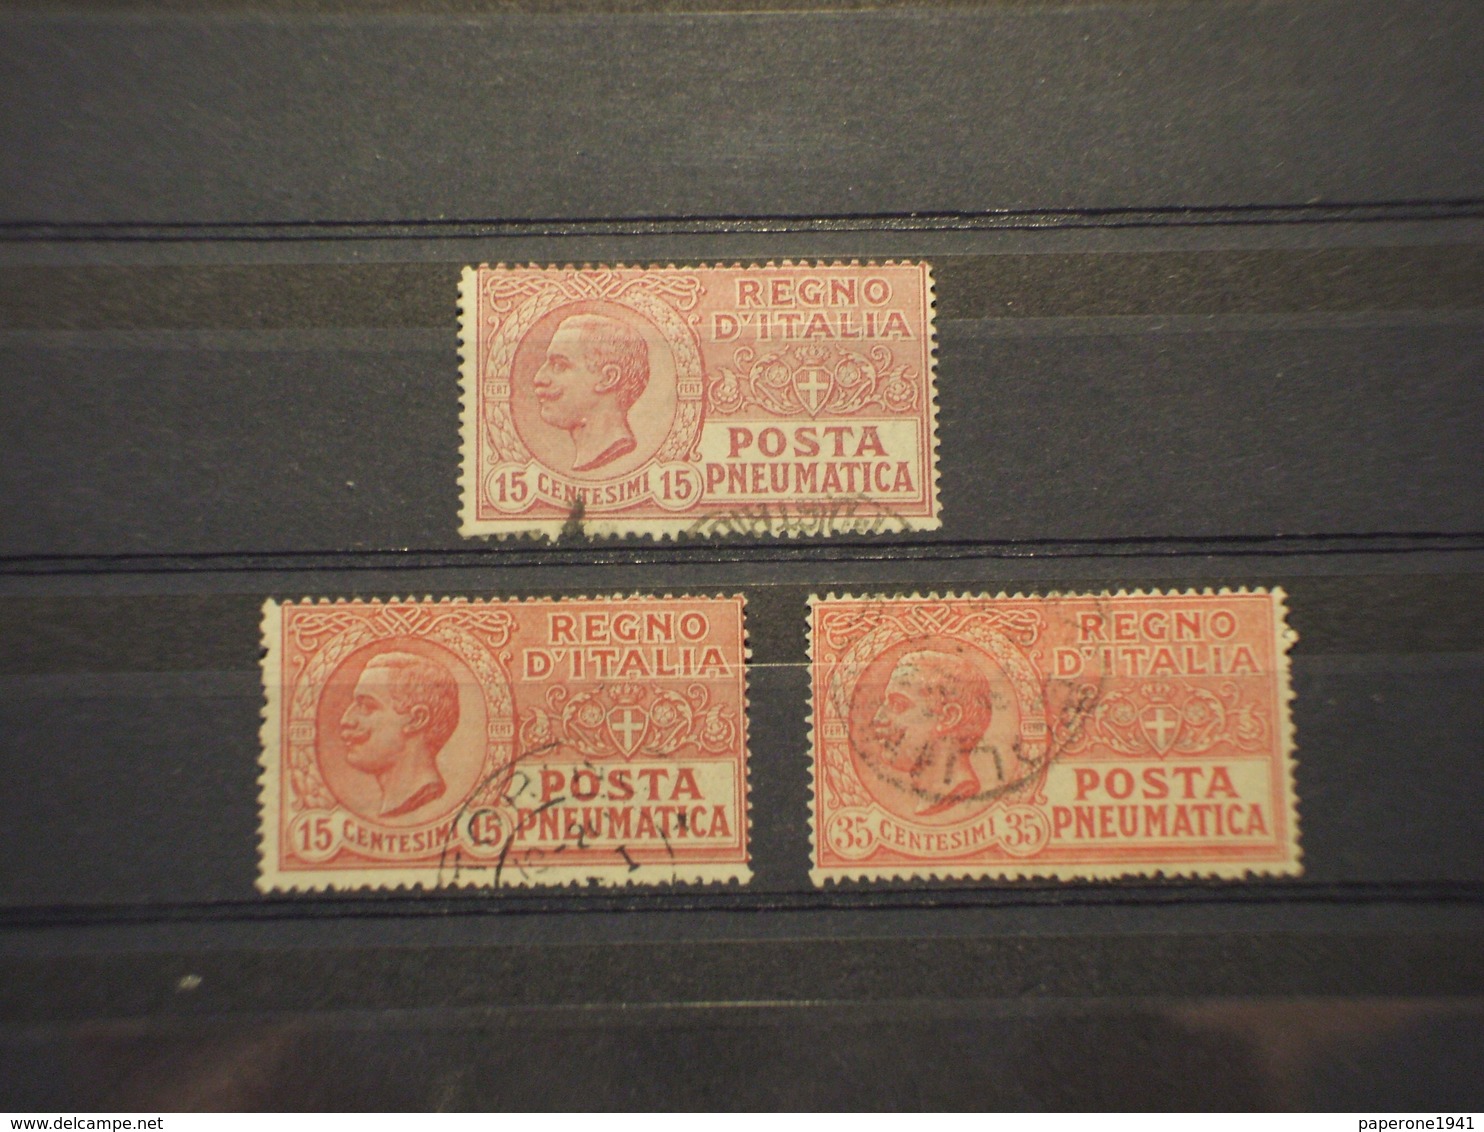 ITALIA REGNO - POSTA PNEUMATICA - 1927/8 RE 2 + 1 VALORE - TIMBRATI/USED - Pneumatic Mail